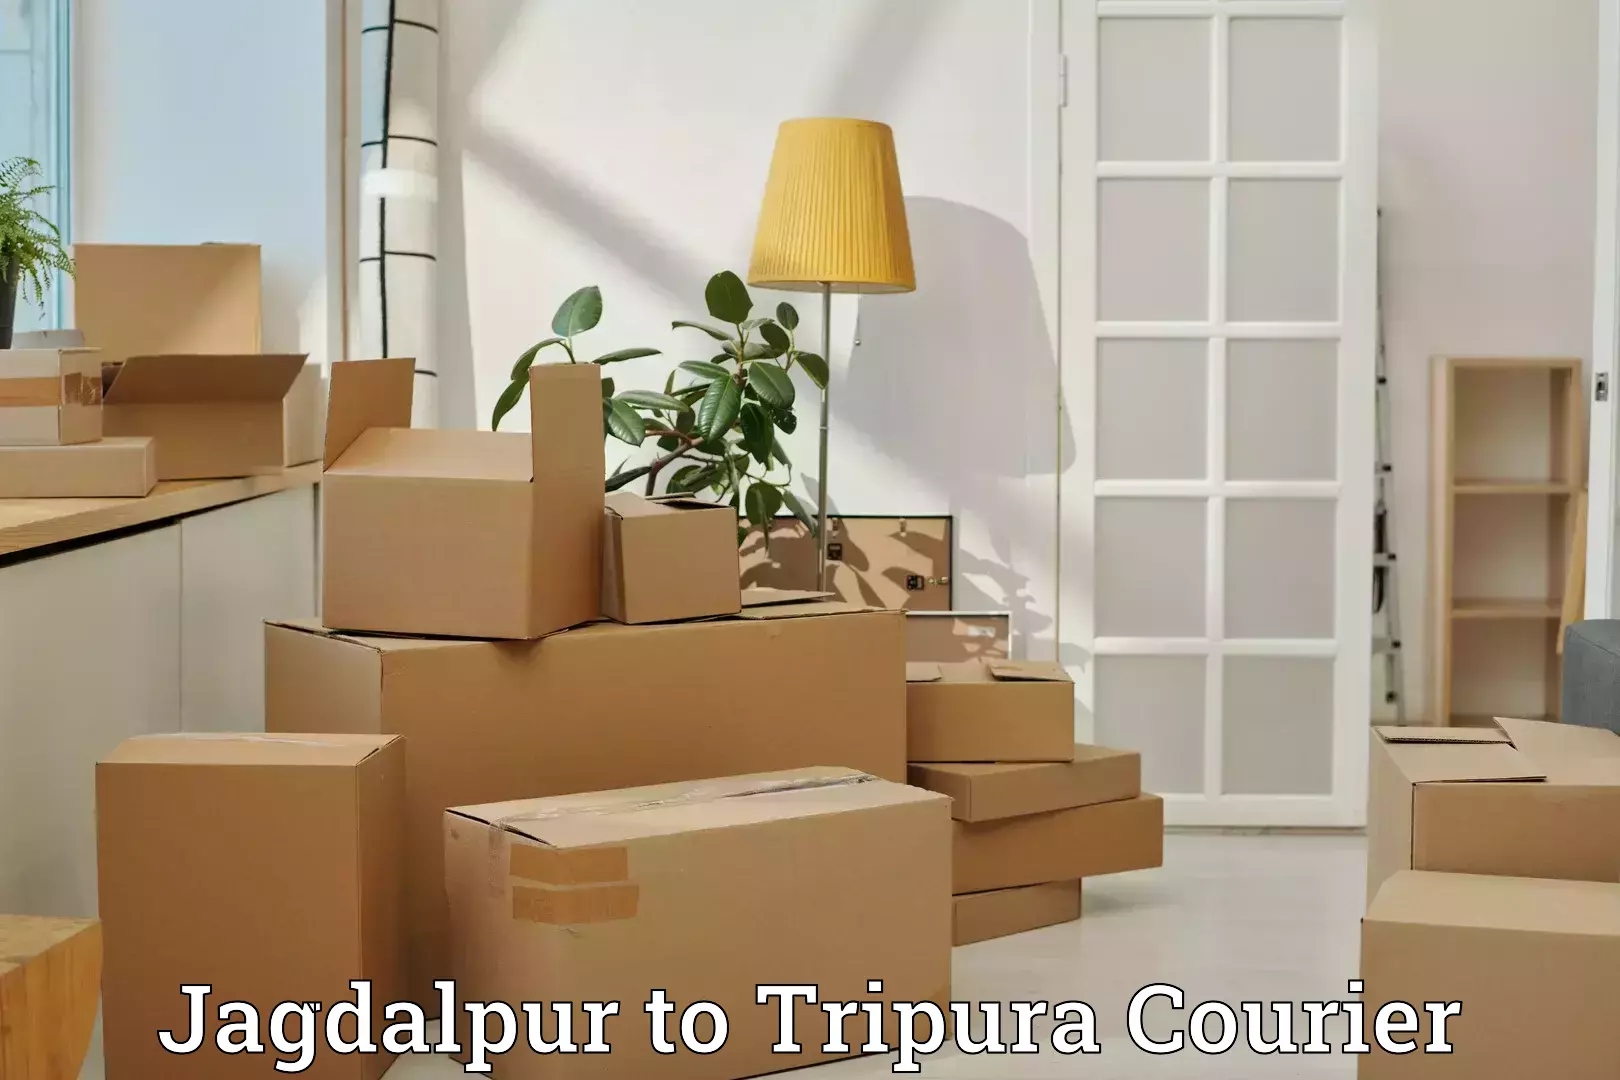 Baggage transport network Jagdalpur to Tripura